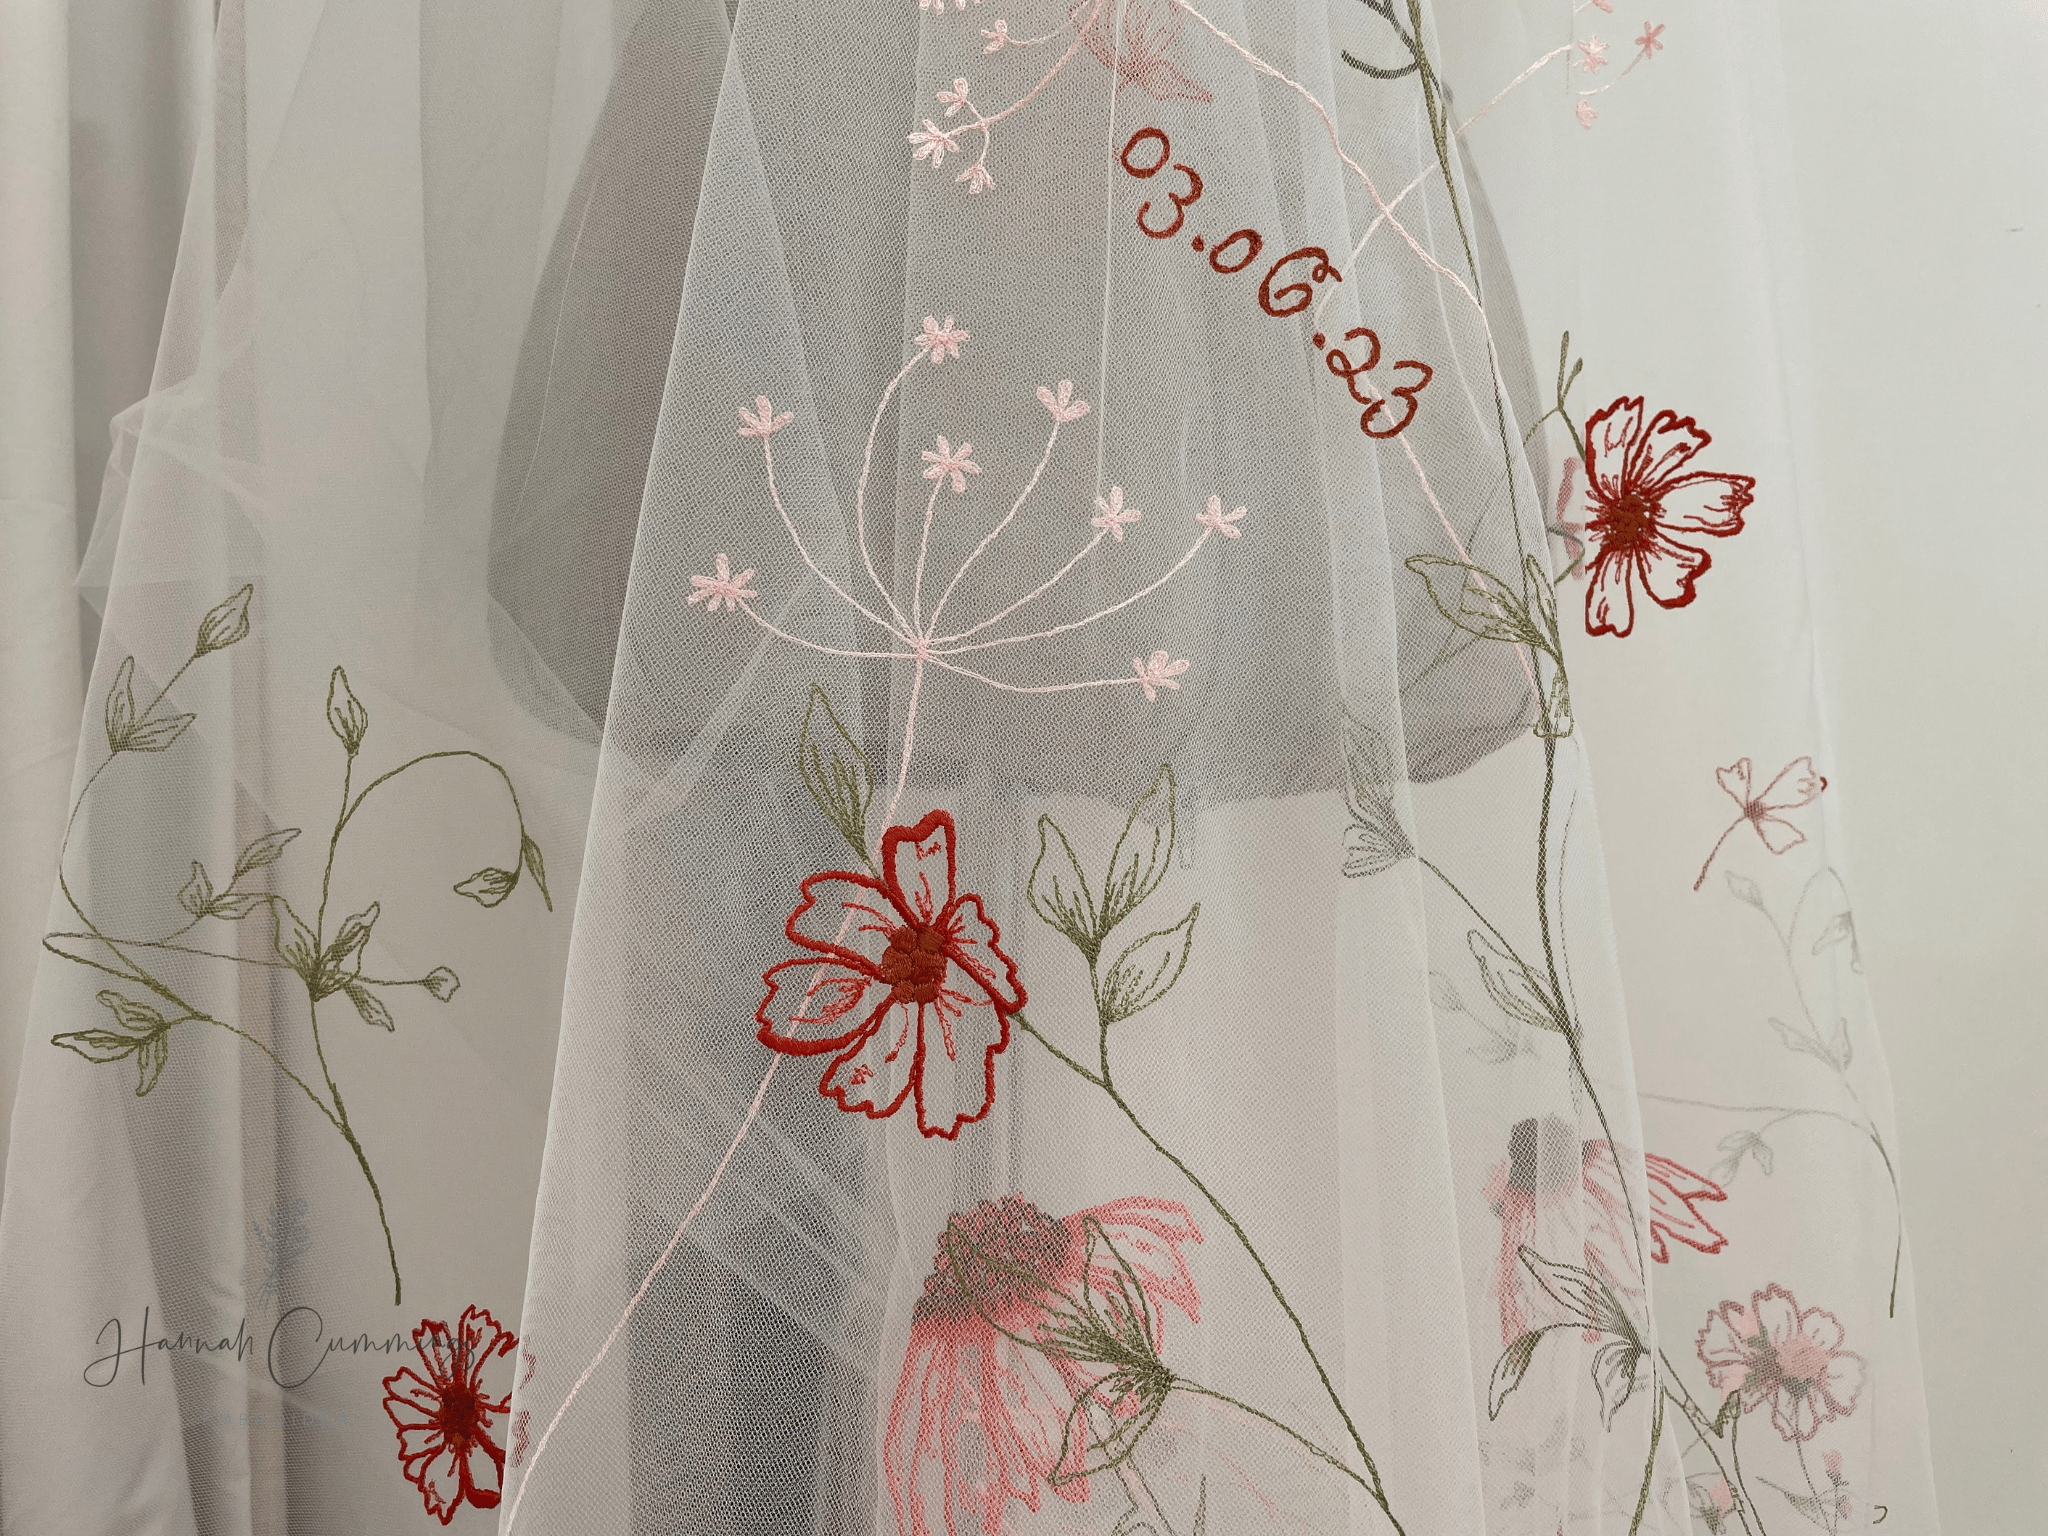  Colourful embroidery design on wedding veil 